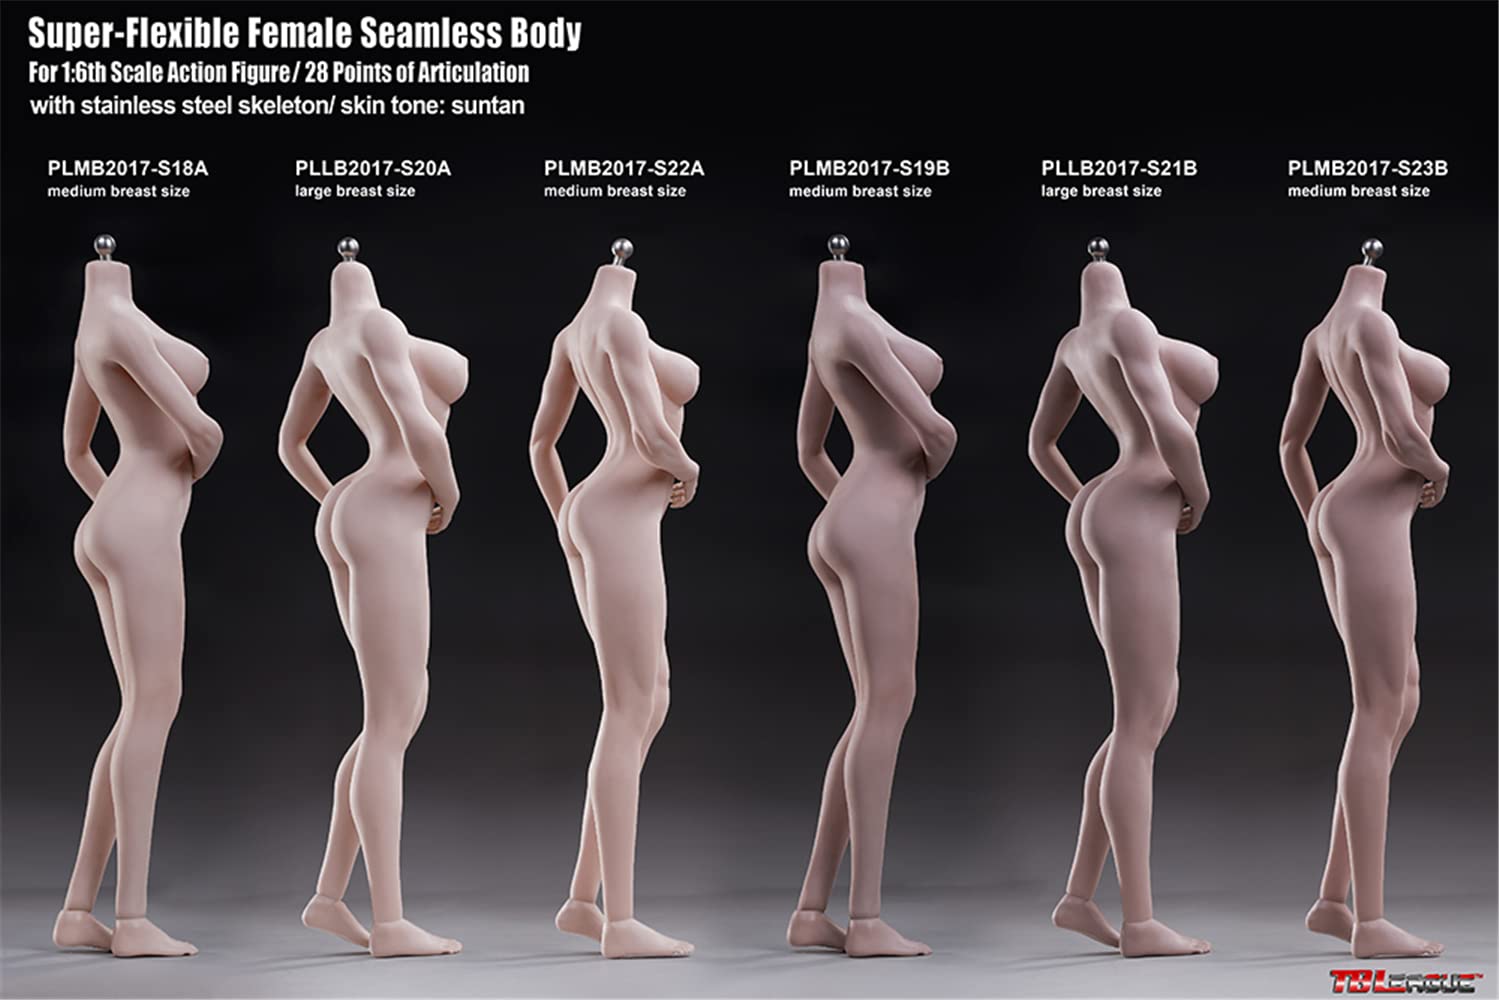 HiPlay TBLeague 1/6 Scale 12 inches Female Super Flexible Seamless Figure Body, Pale Skin, S22A (Muscular & Medium Bust)